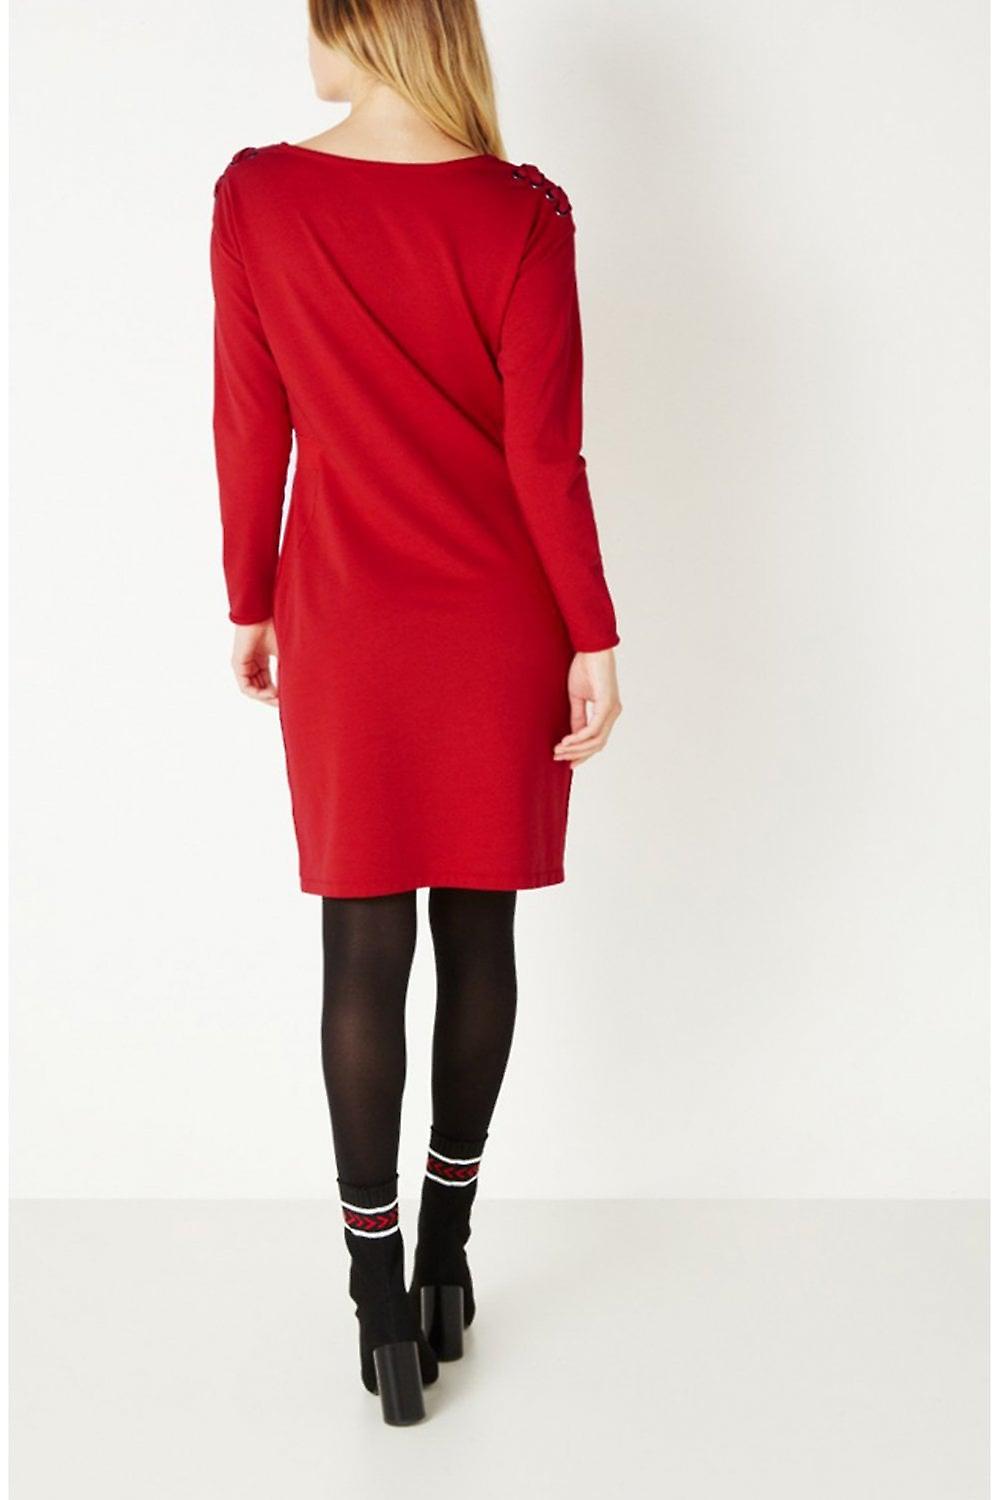 salami Recensent motor Sandwich jurk sweater met lace up schouder rood - Vegas For Her jurk  Diverse JippieJurk